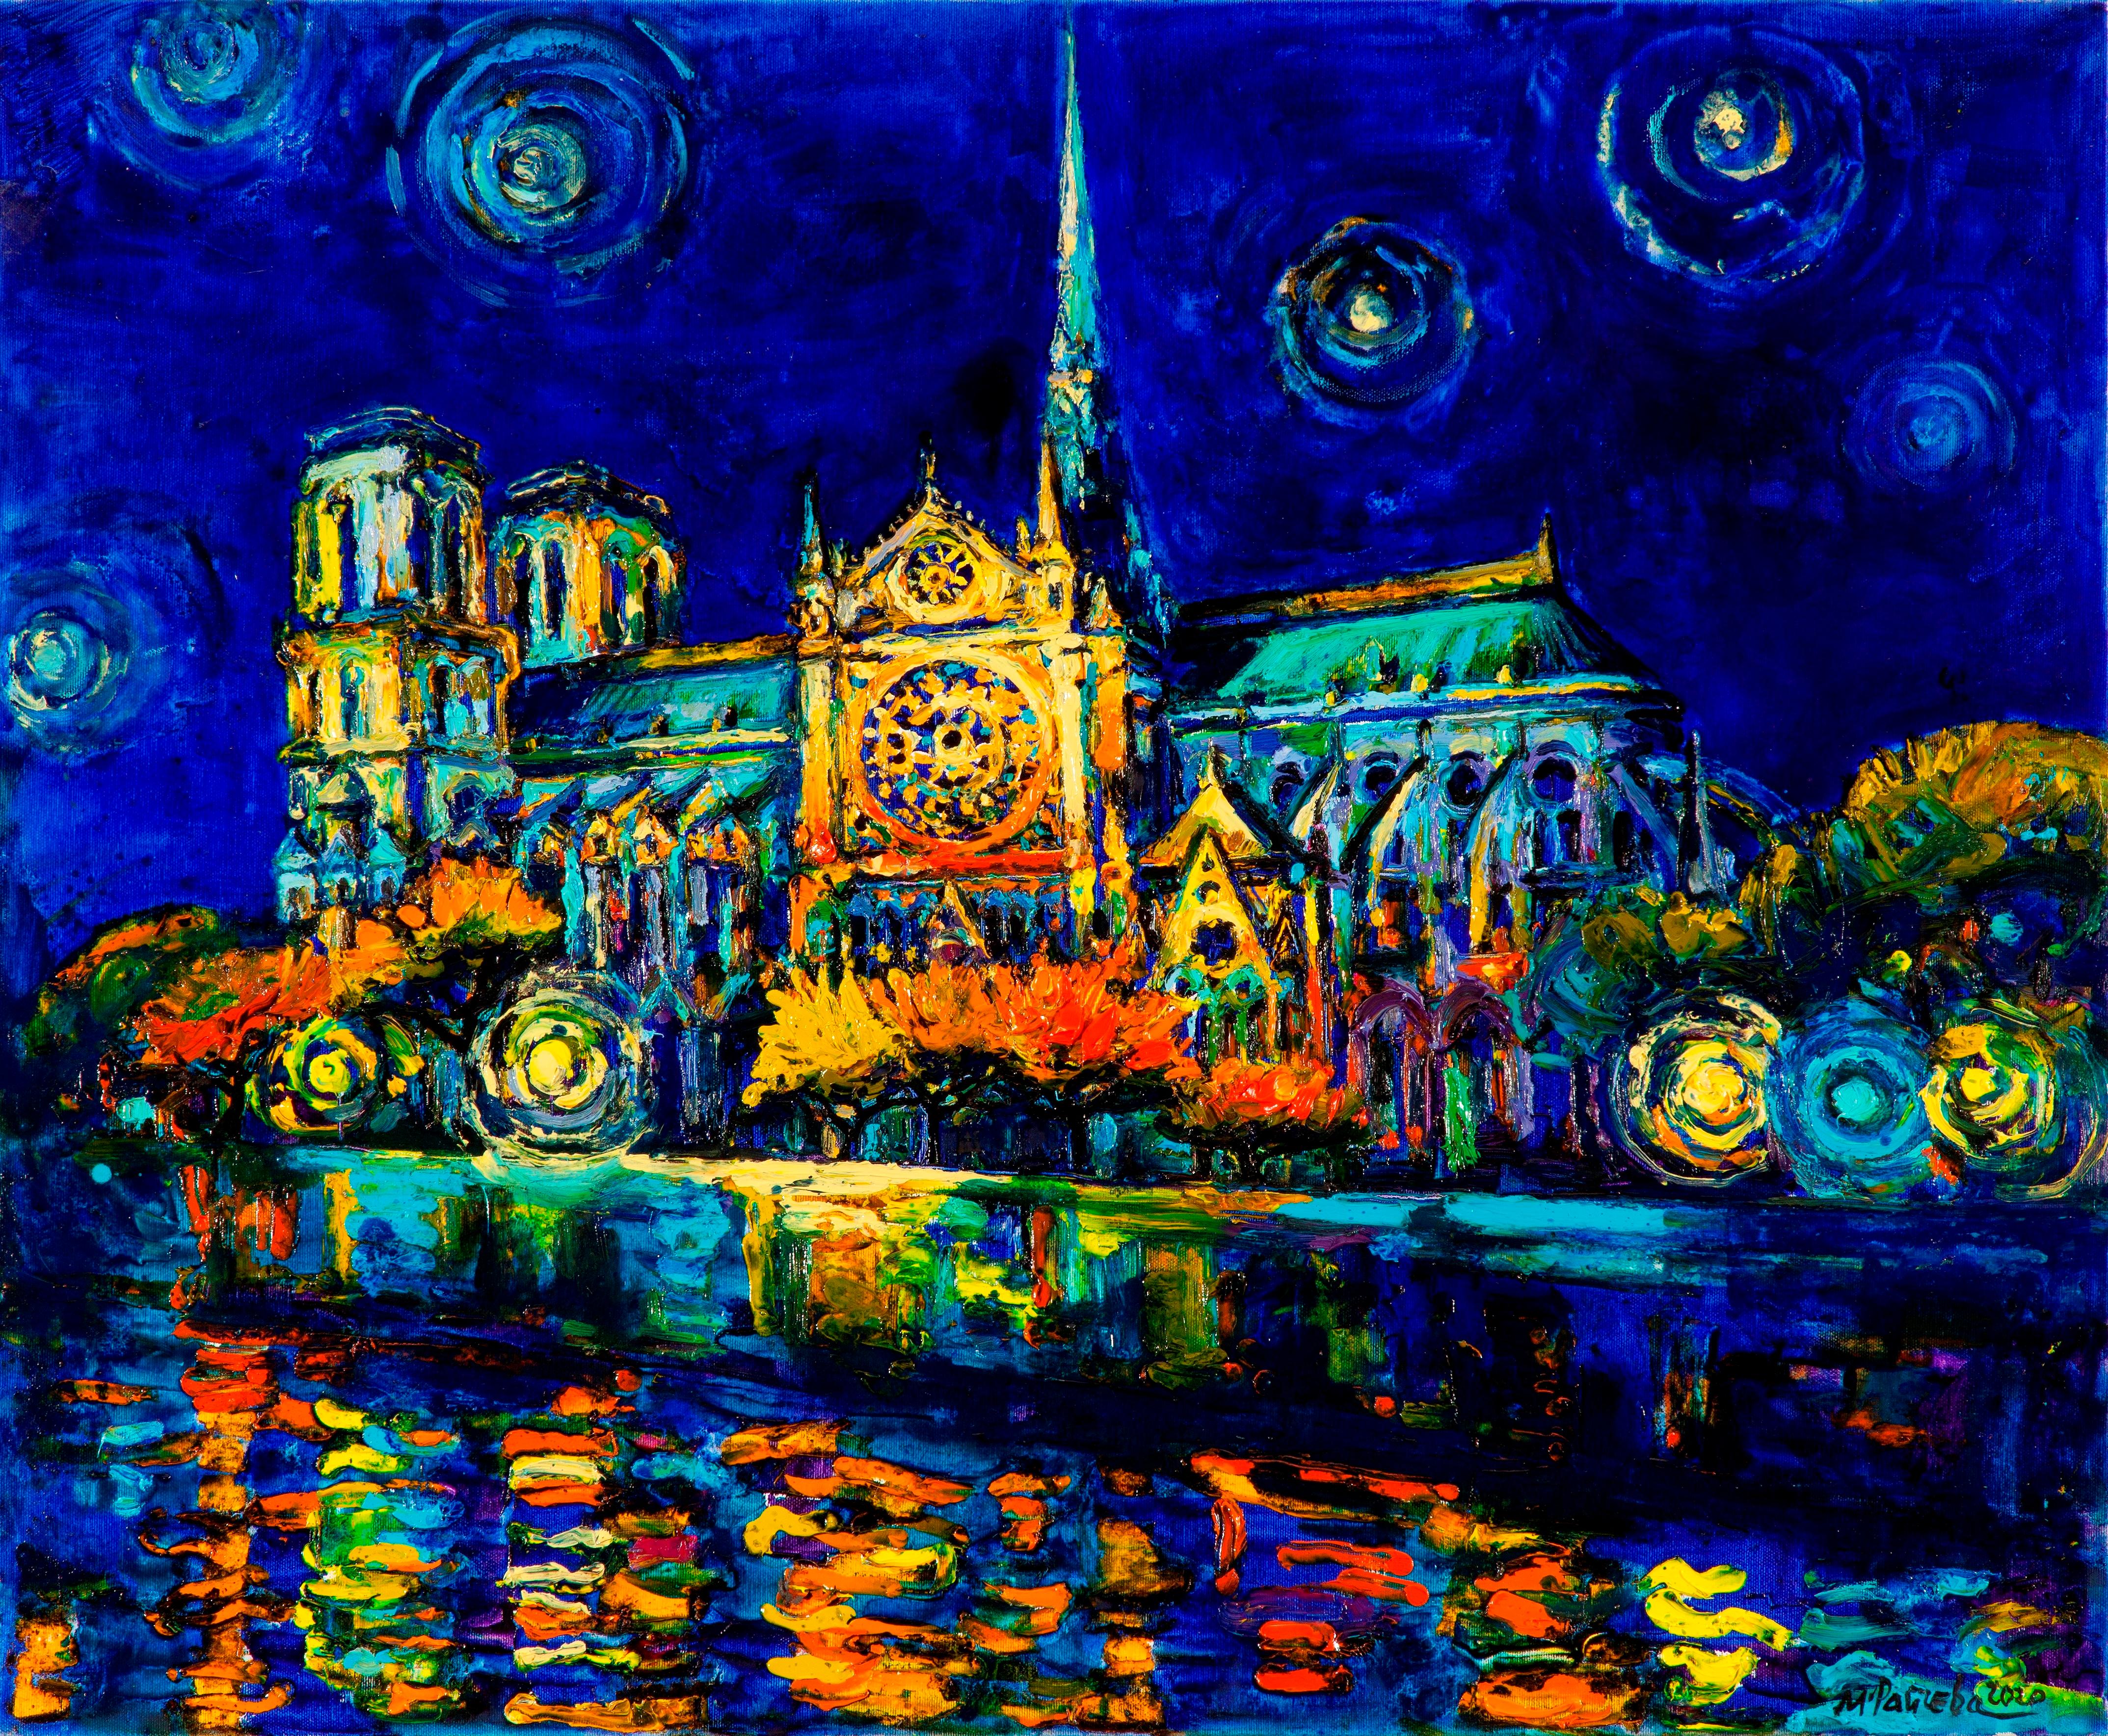 La Notre Dame - By Night Landscape Painting Oil Yellow White Blue Black Orange